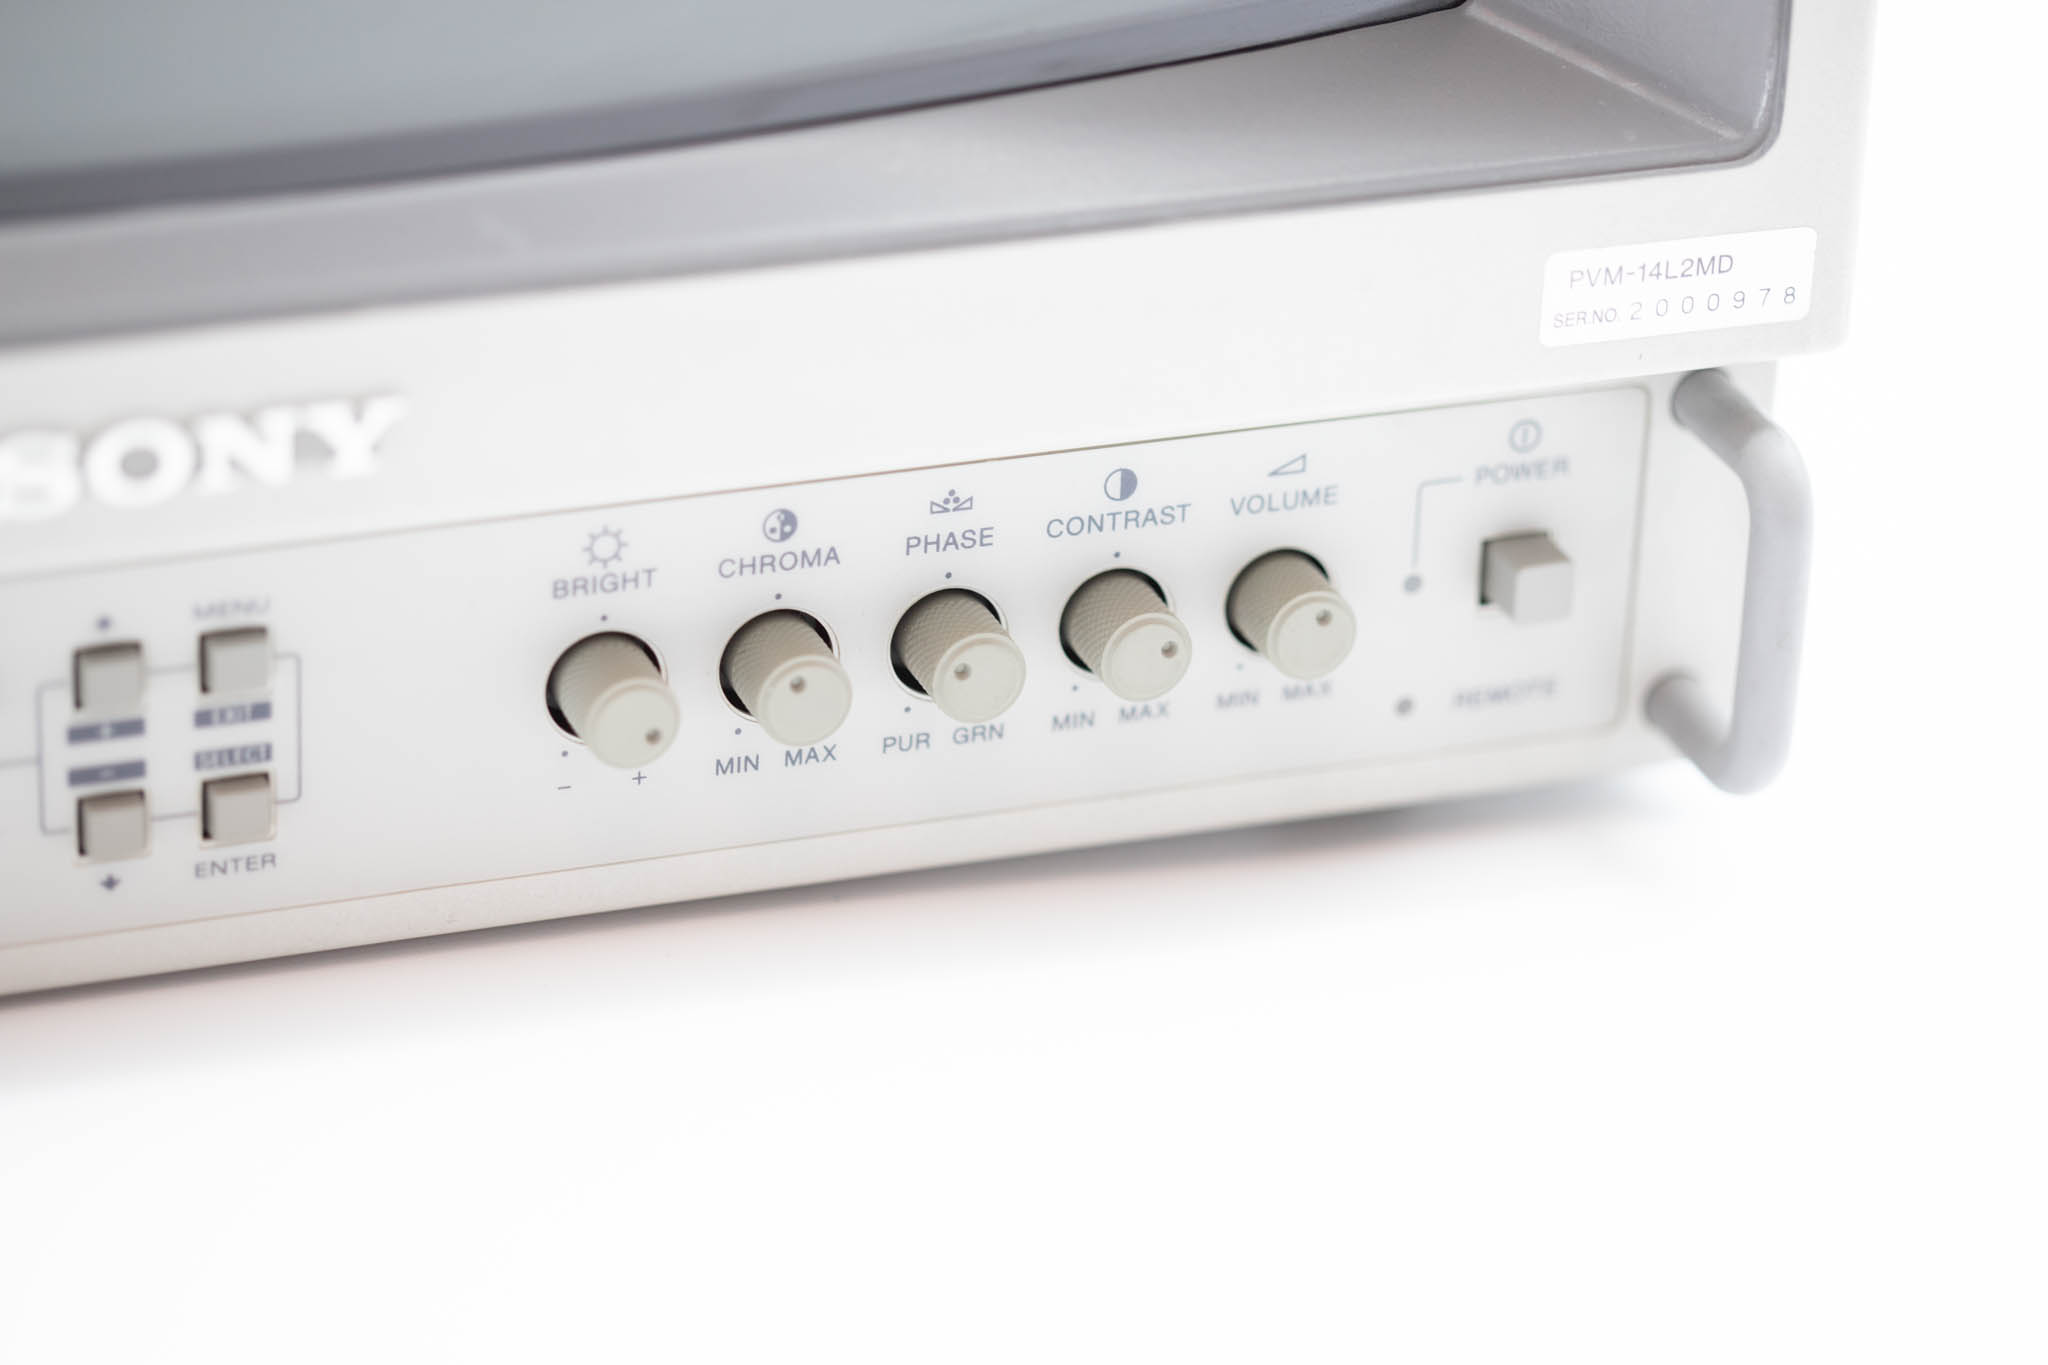 Sony 14" Trinitron Medical Grade Monitor - PVM-14L2MD